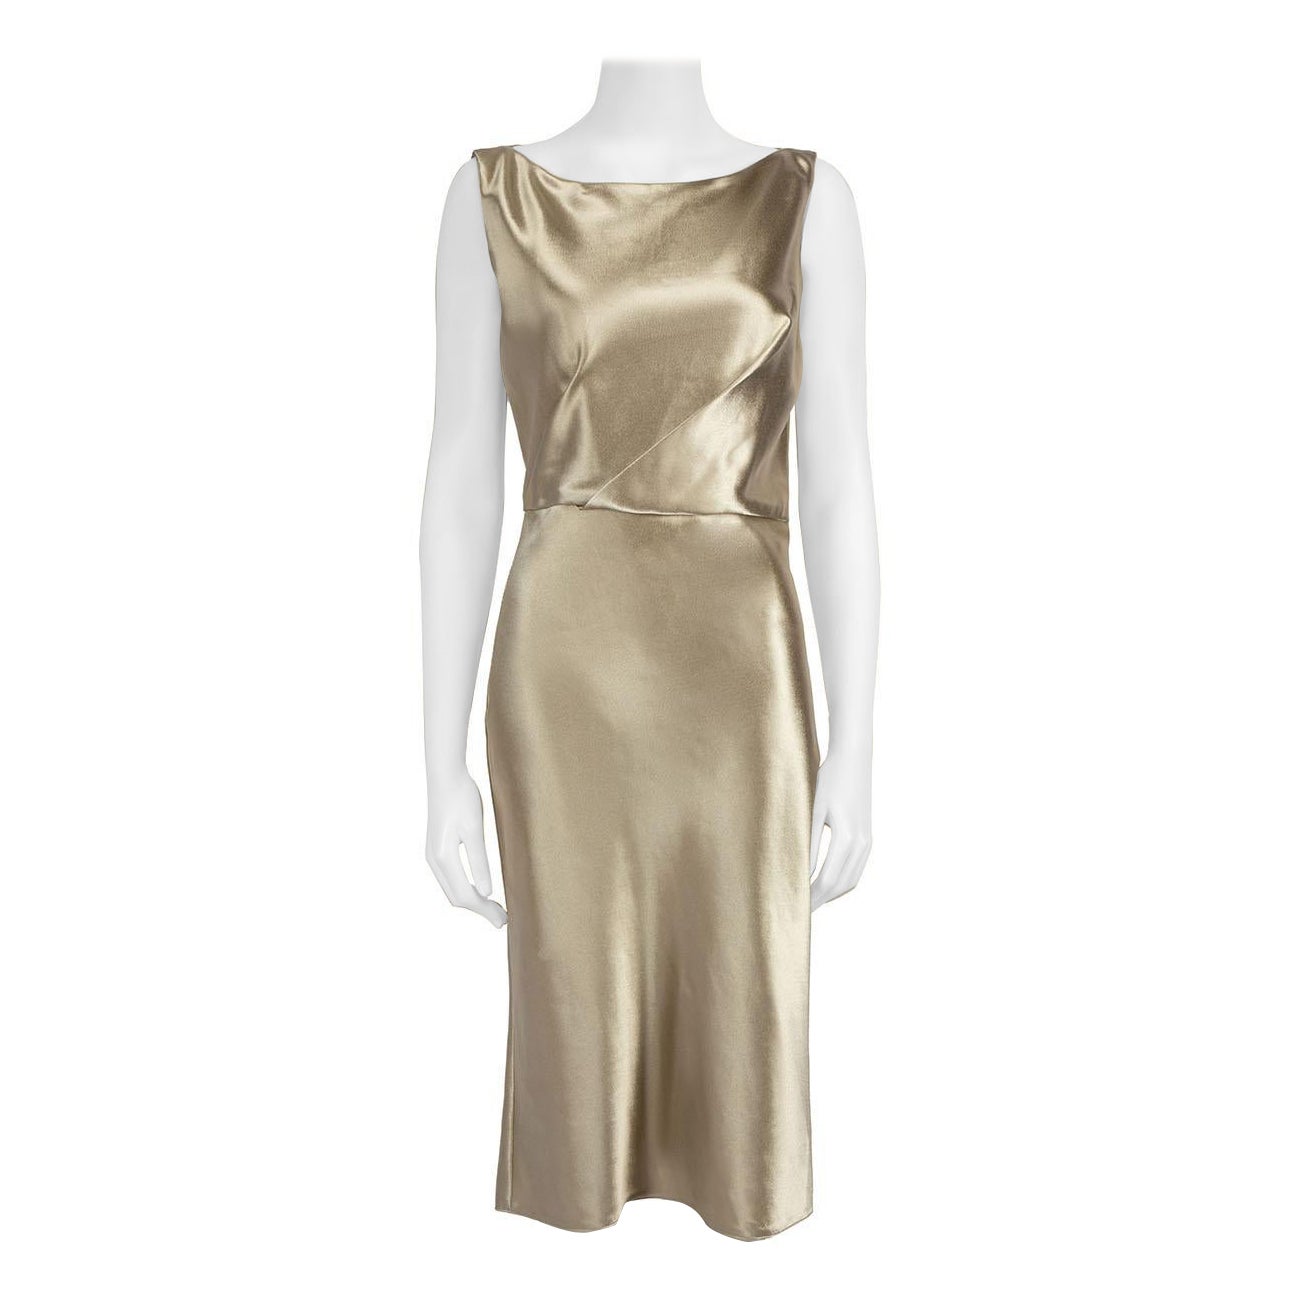 Nili Lotan Gold Wide Neck Midi Length Dress Size S For Sale